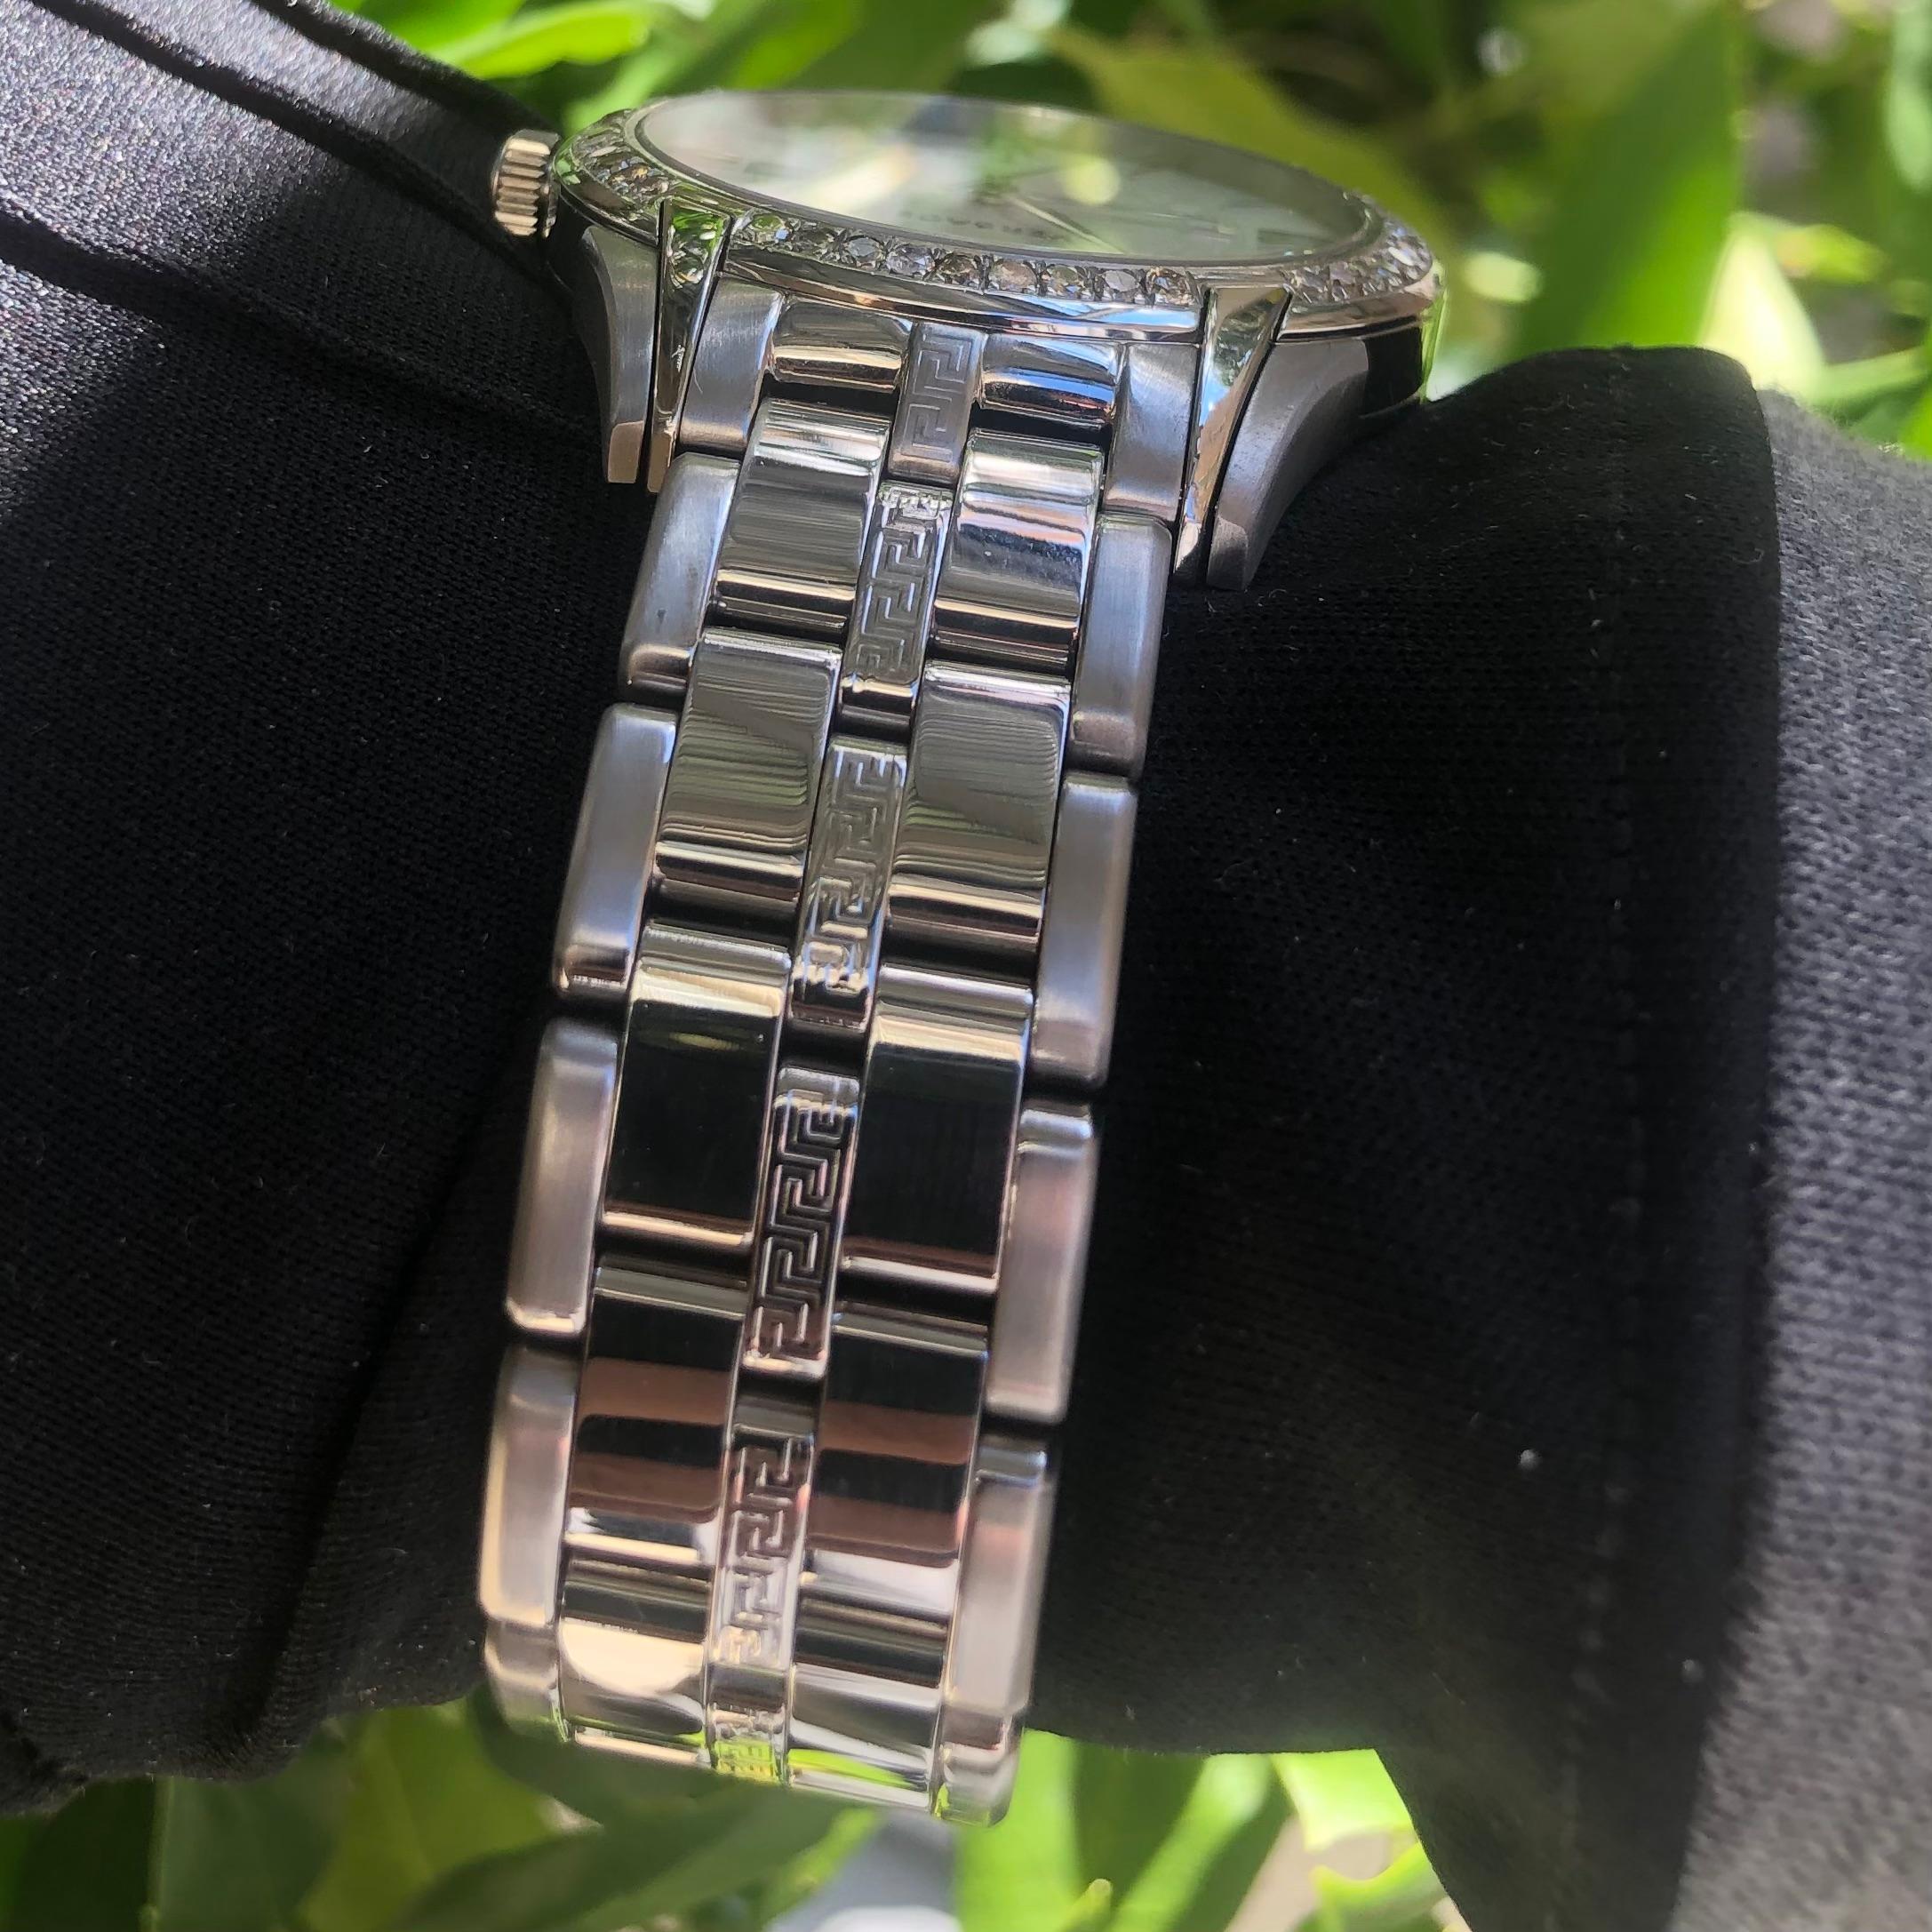 Round Cut Versace Men’s 42mm Watch with Custom Diamond Iced Bezel For Sale